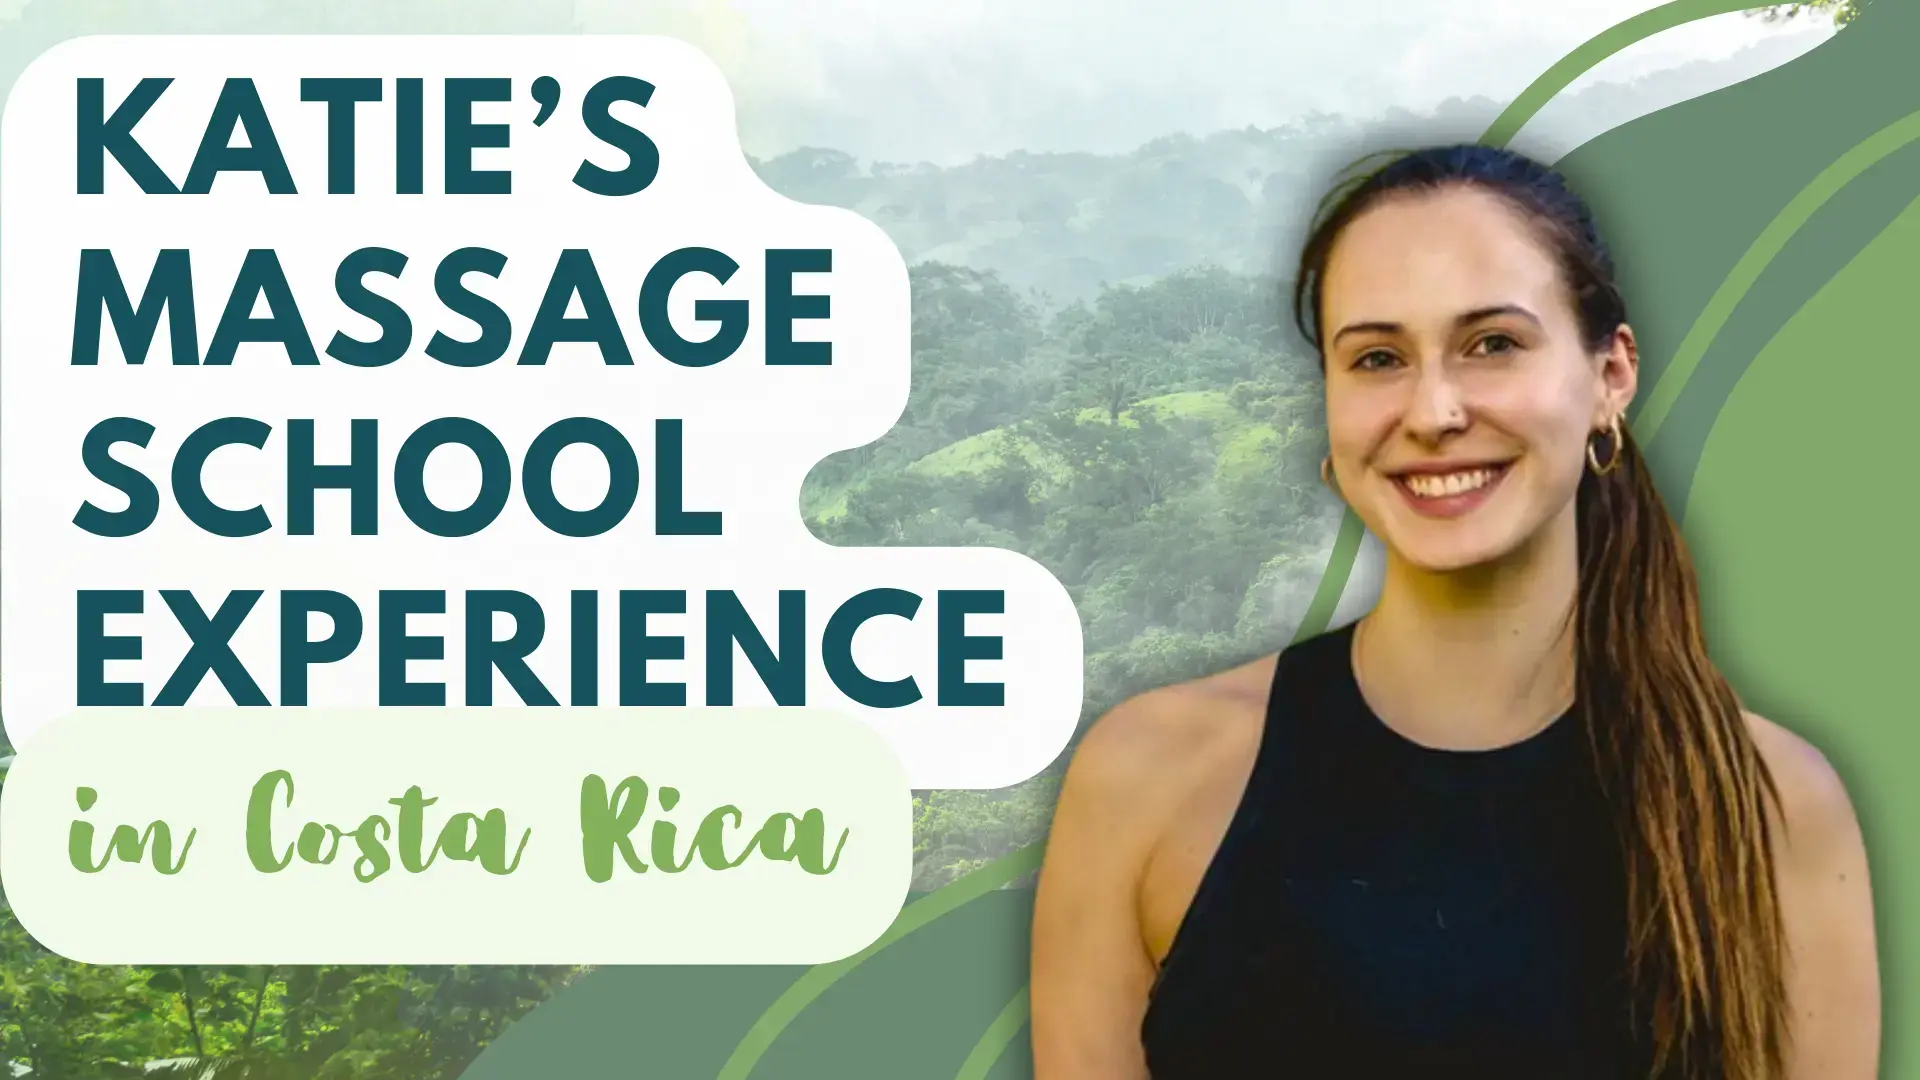 Katie's massage school experience video interview